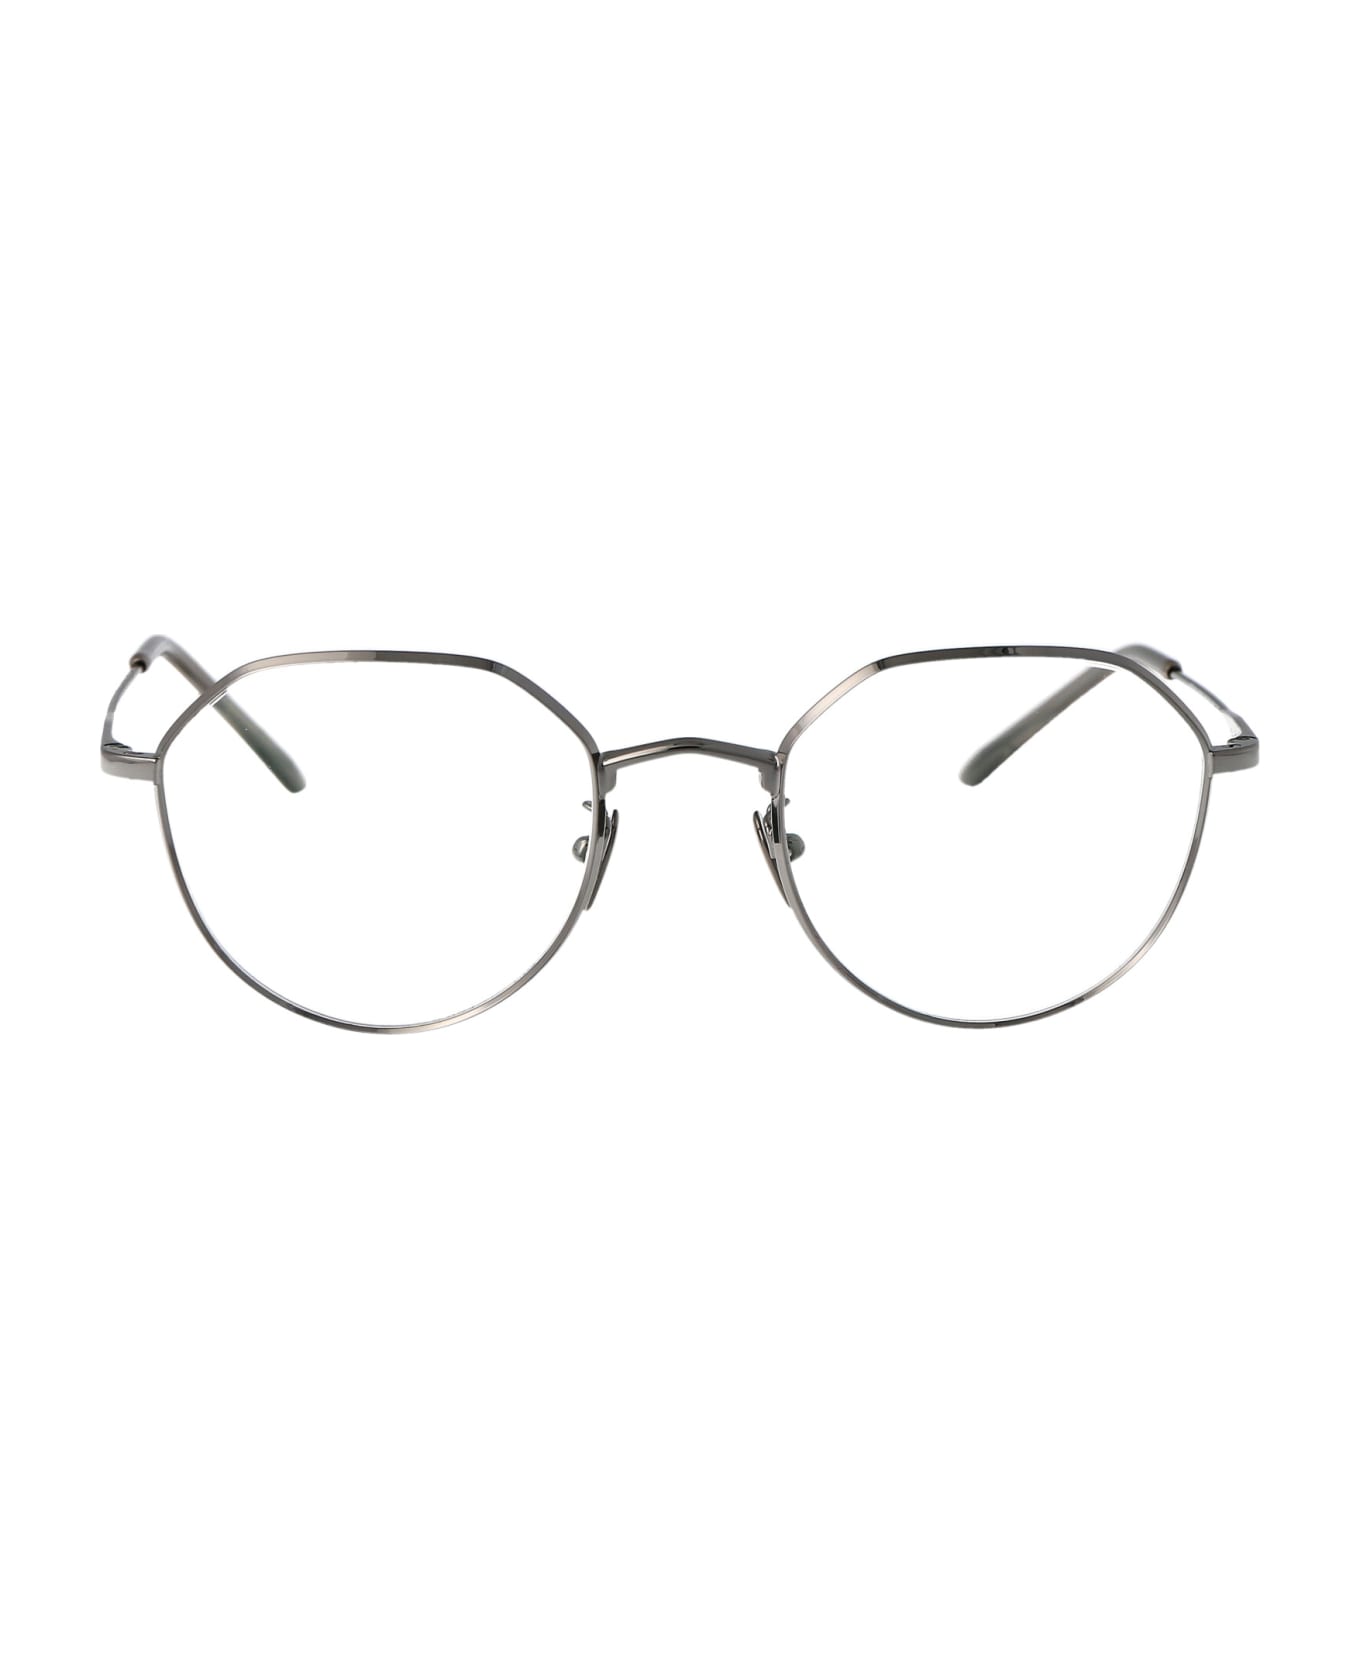 Giorgio Armani 0ar5142 Glasses - 3010 GUNMETAL